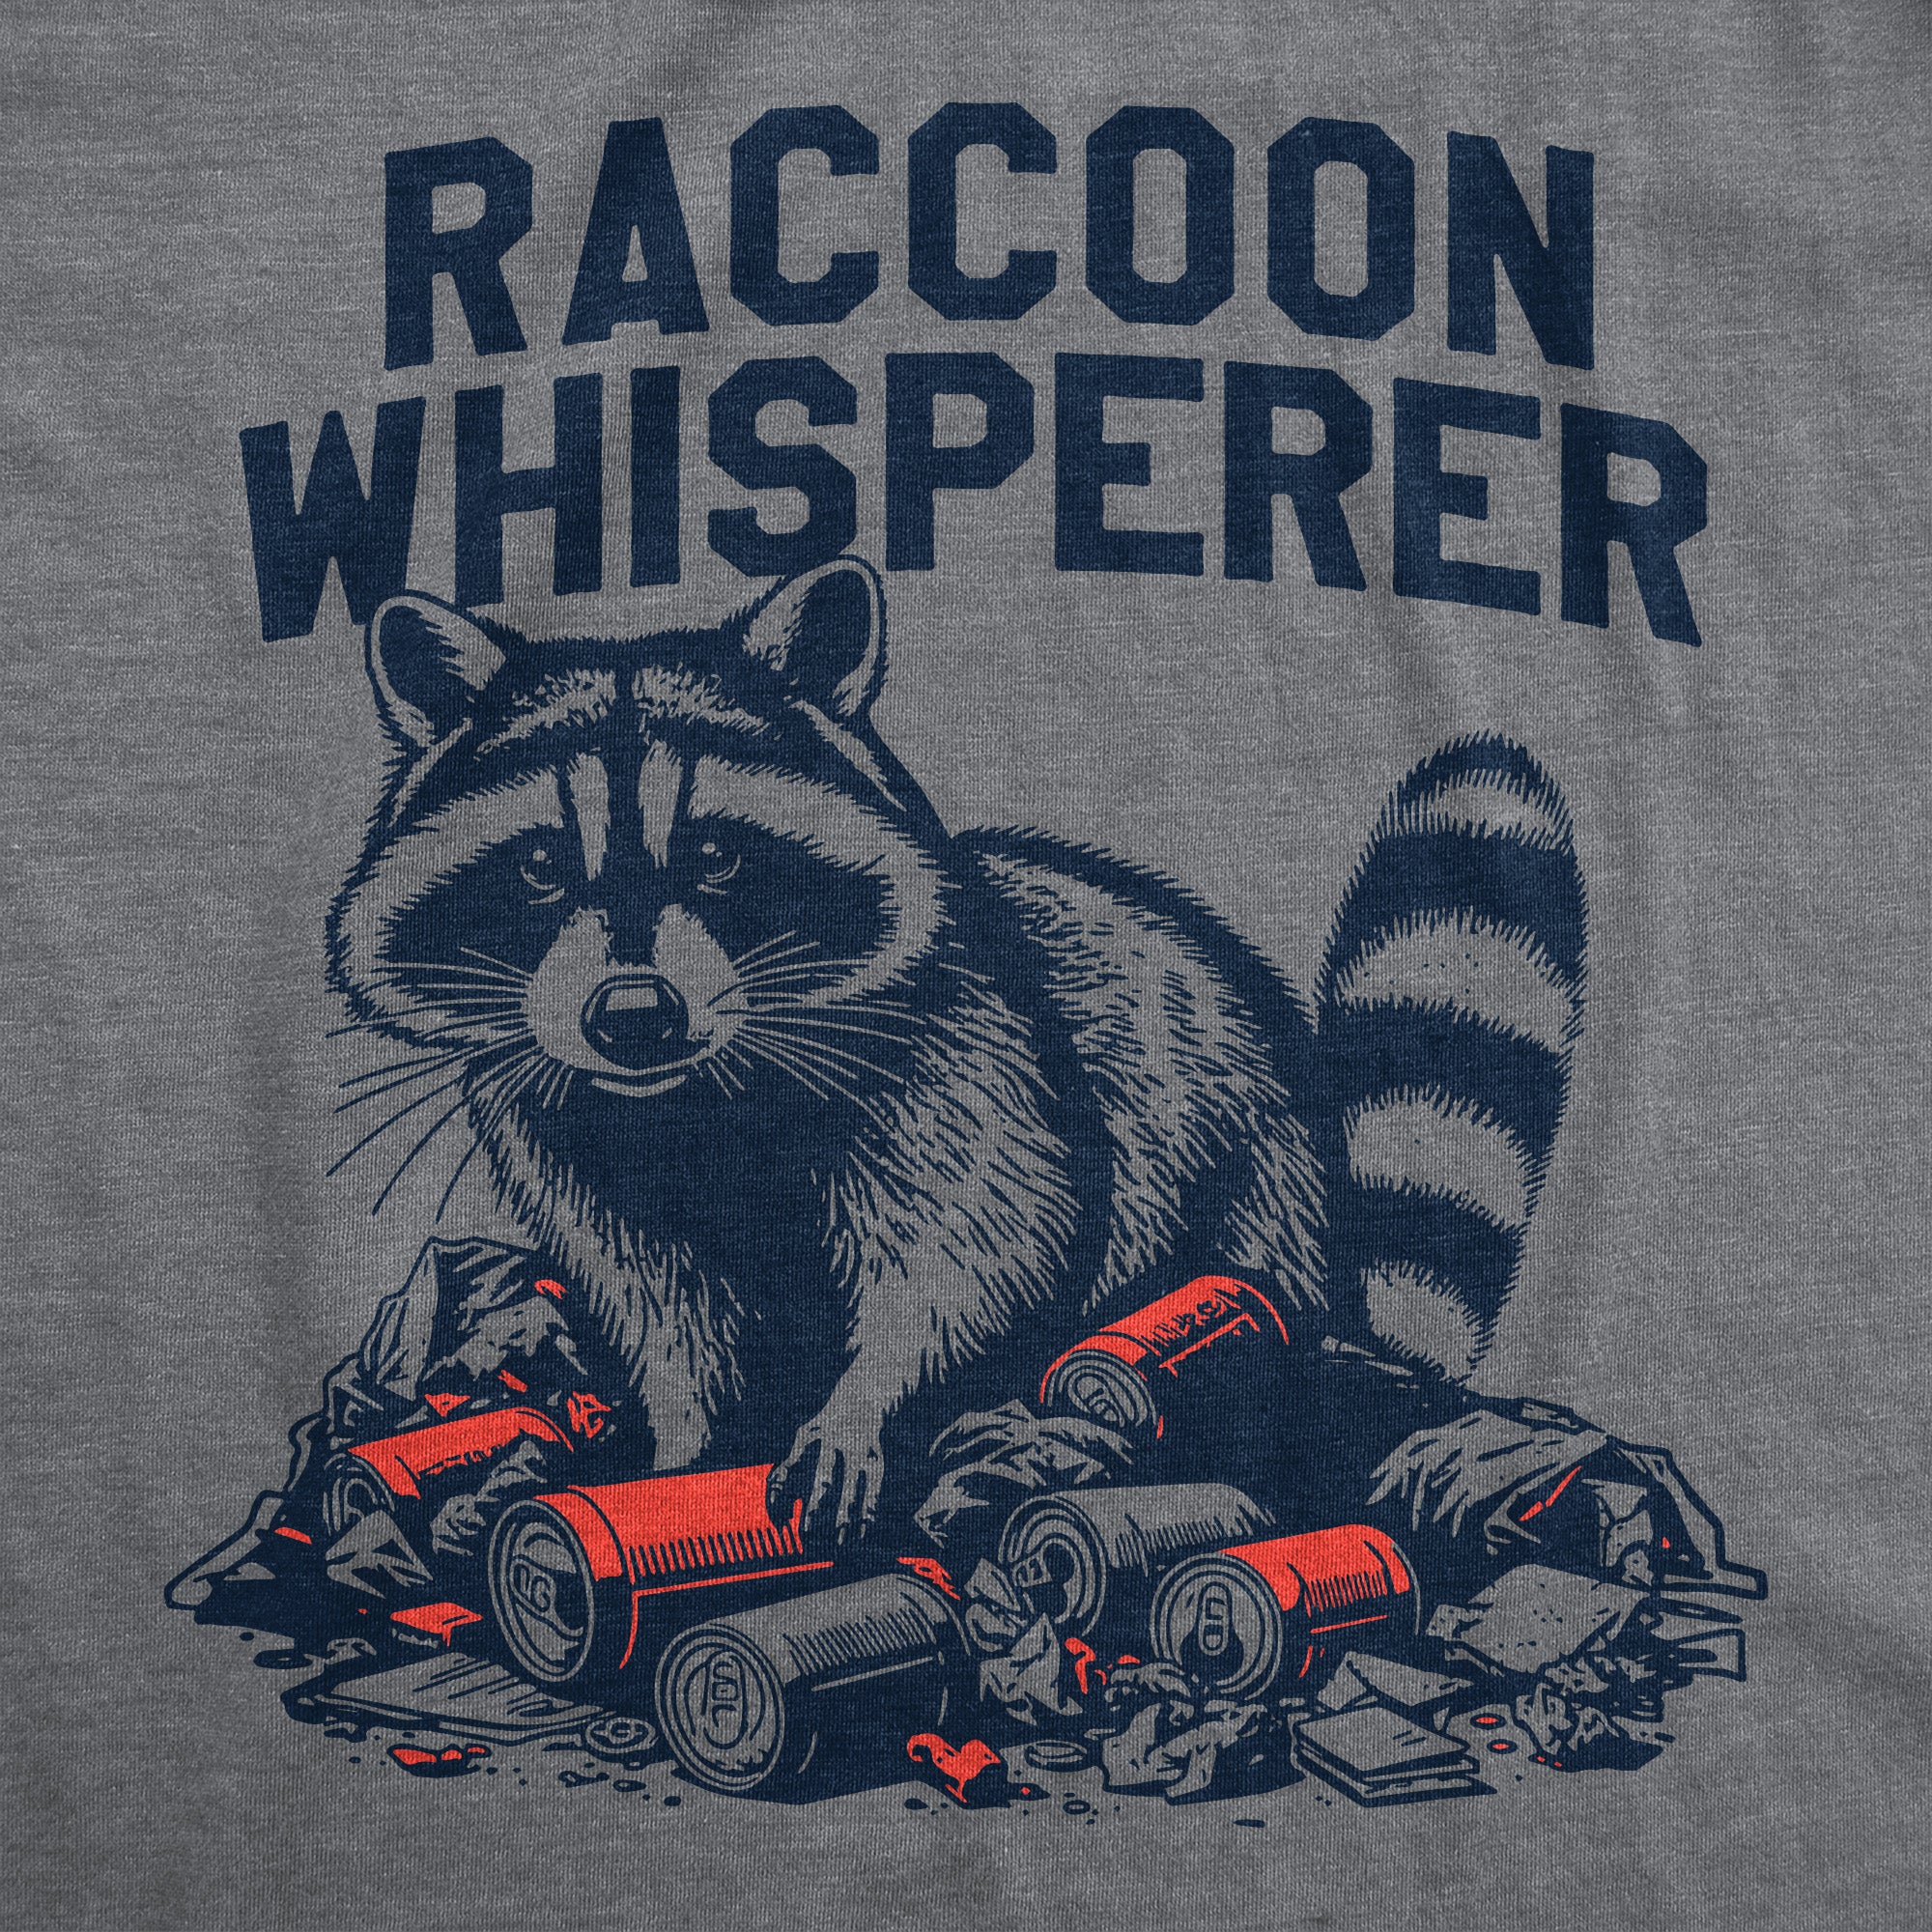 Funny Dark Heather Grey - Raccoon Whisperer Raccoon Whisperer Womens T Shirt Nerdy animal sarcastic Tee